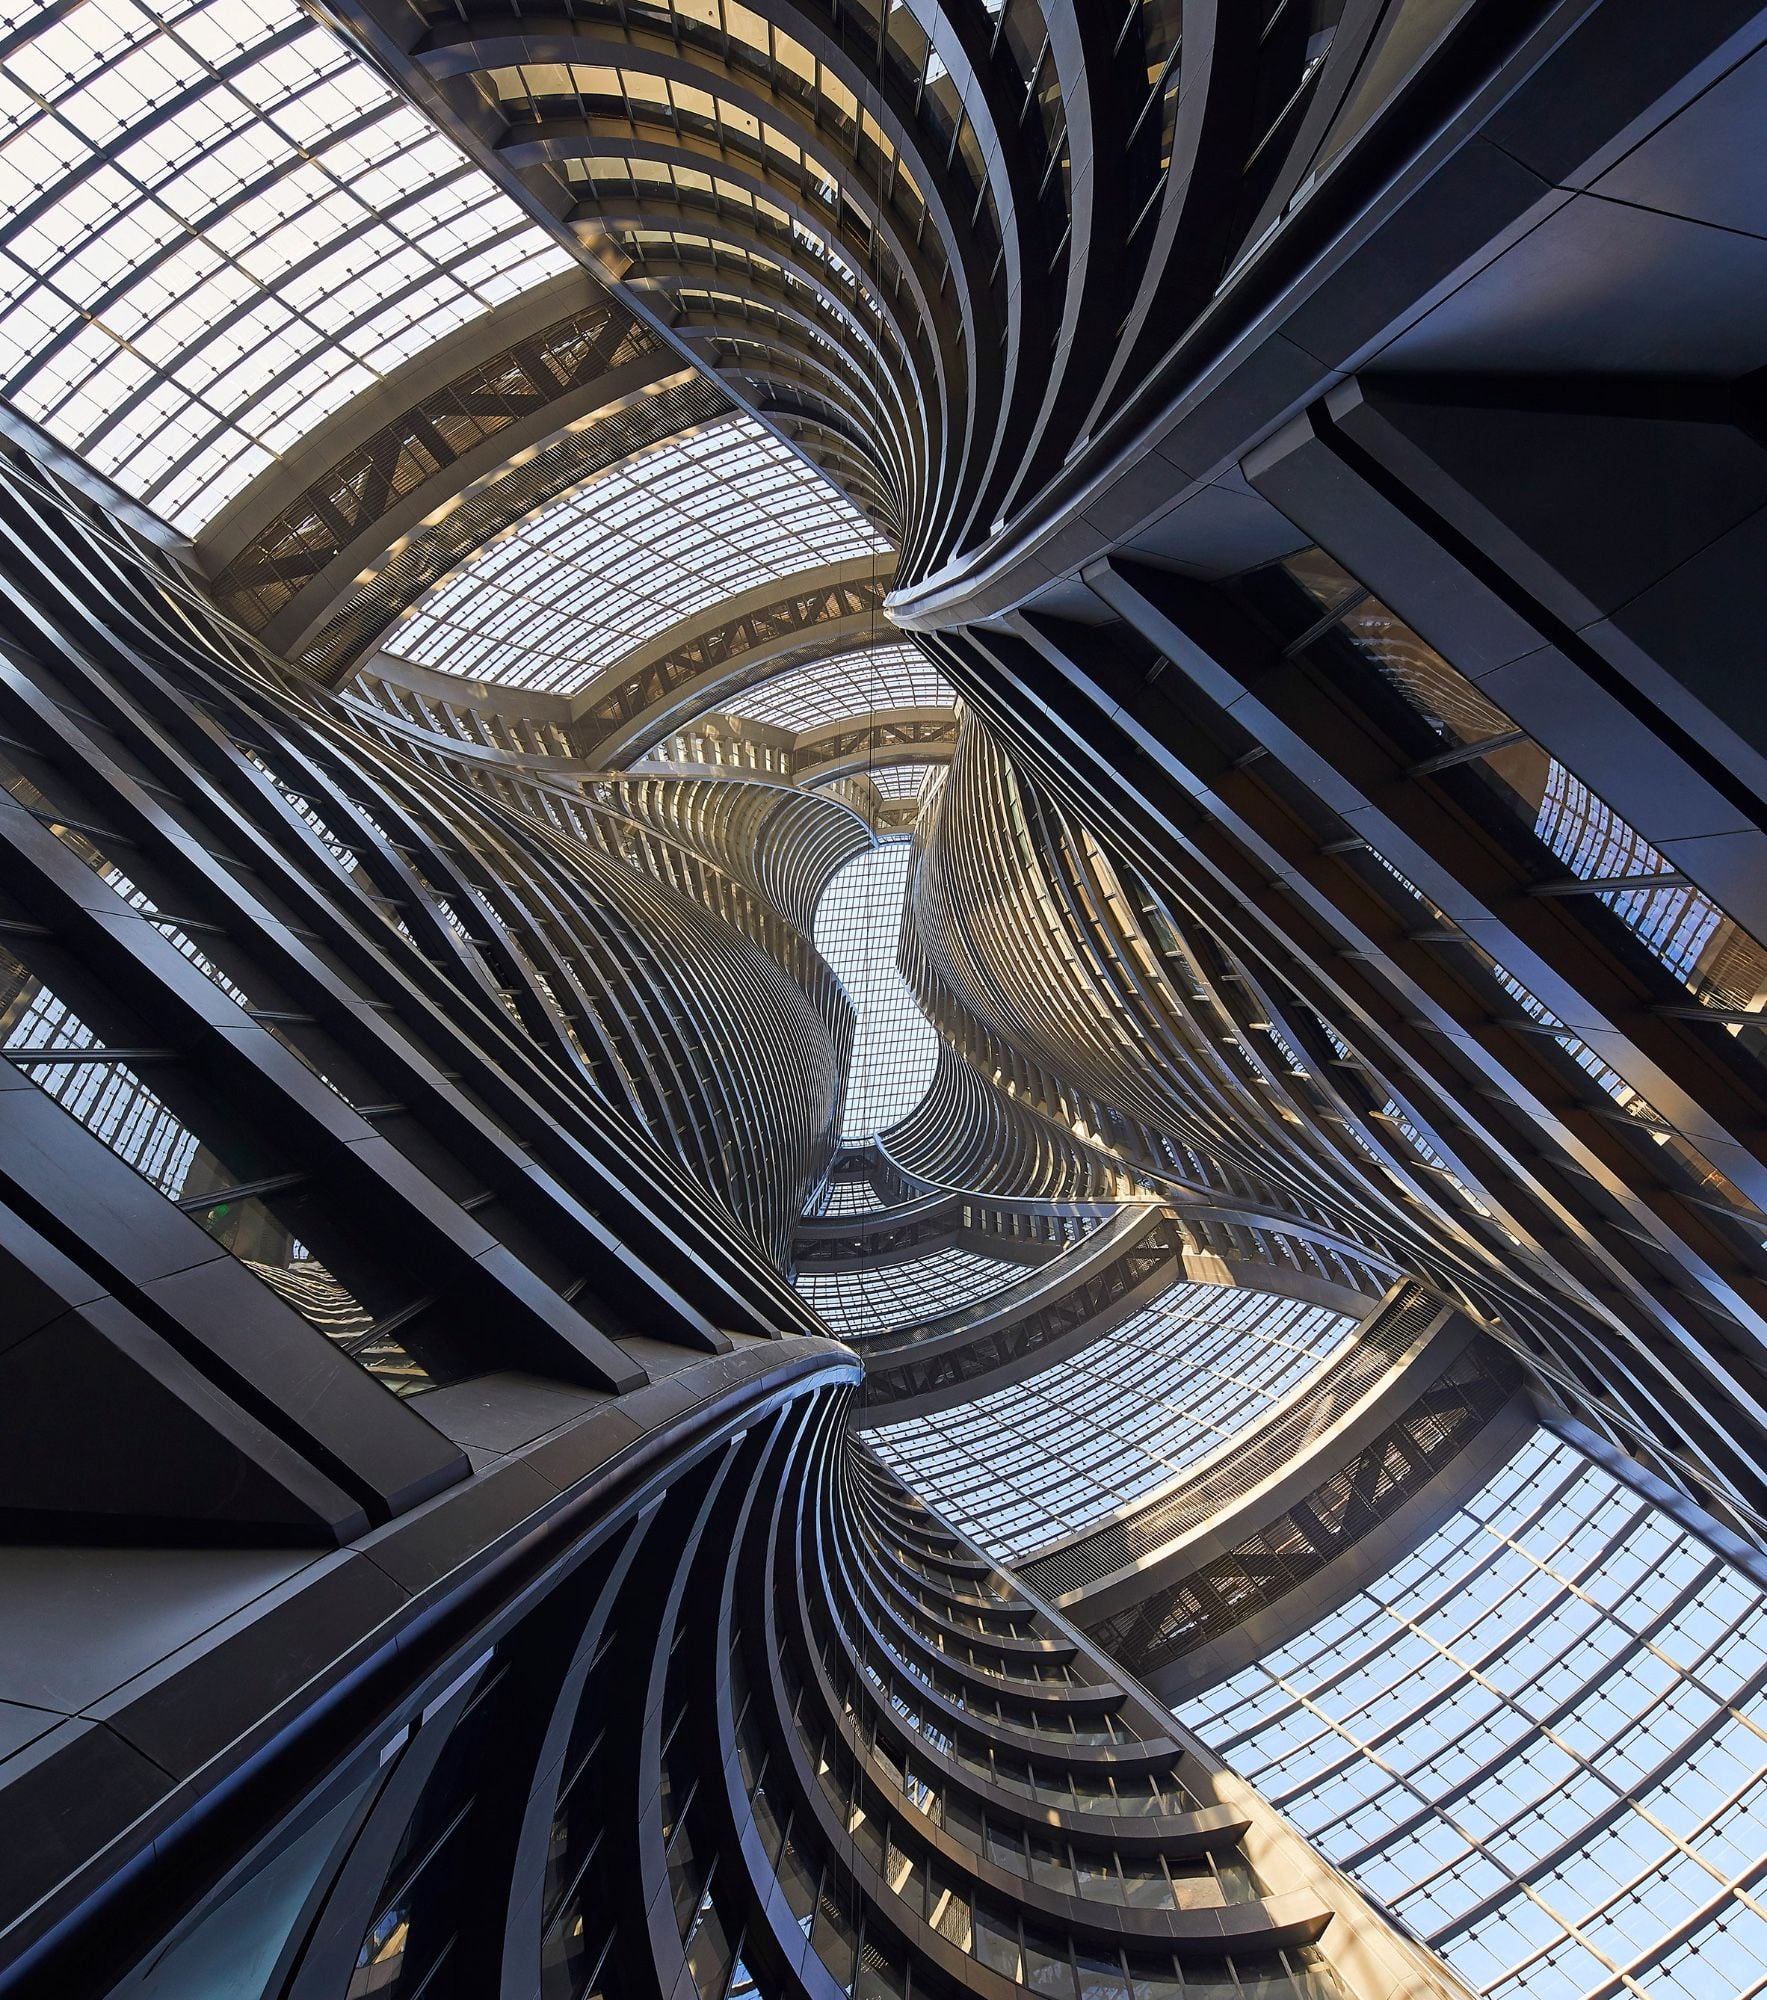 Upward view of the Leeza SOHO Tower's spiraling central atrium 